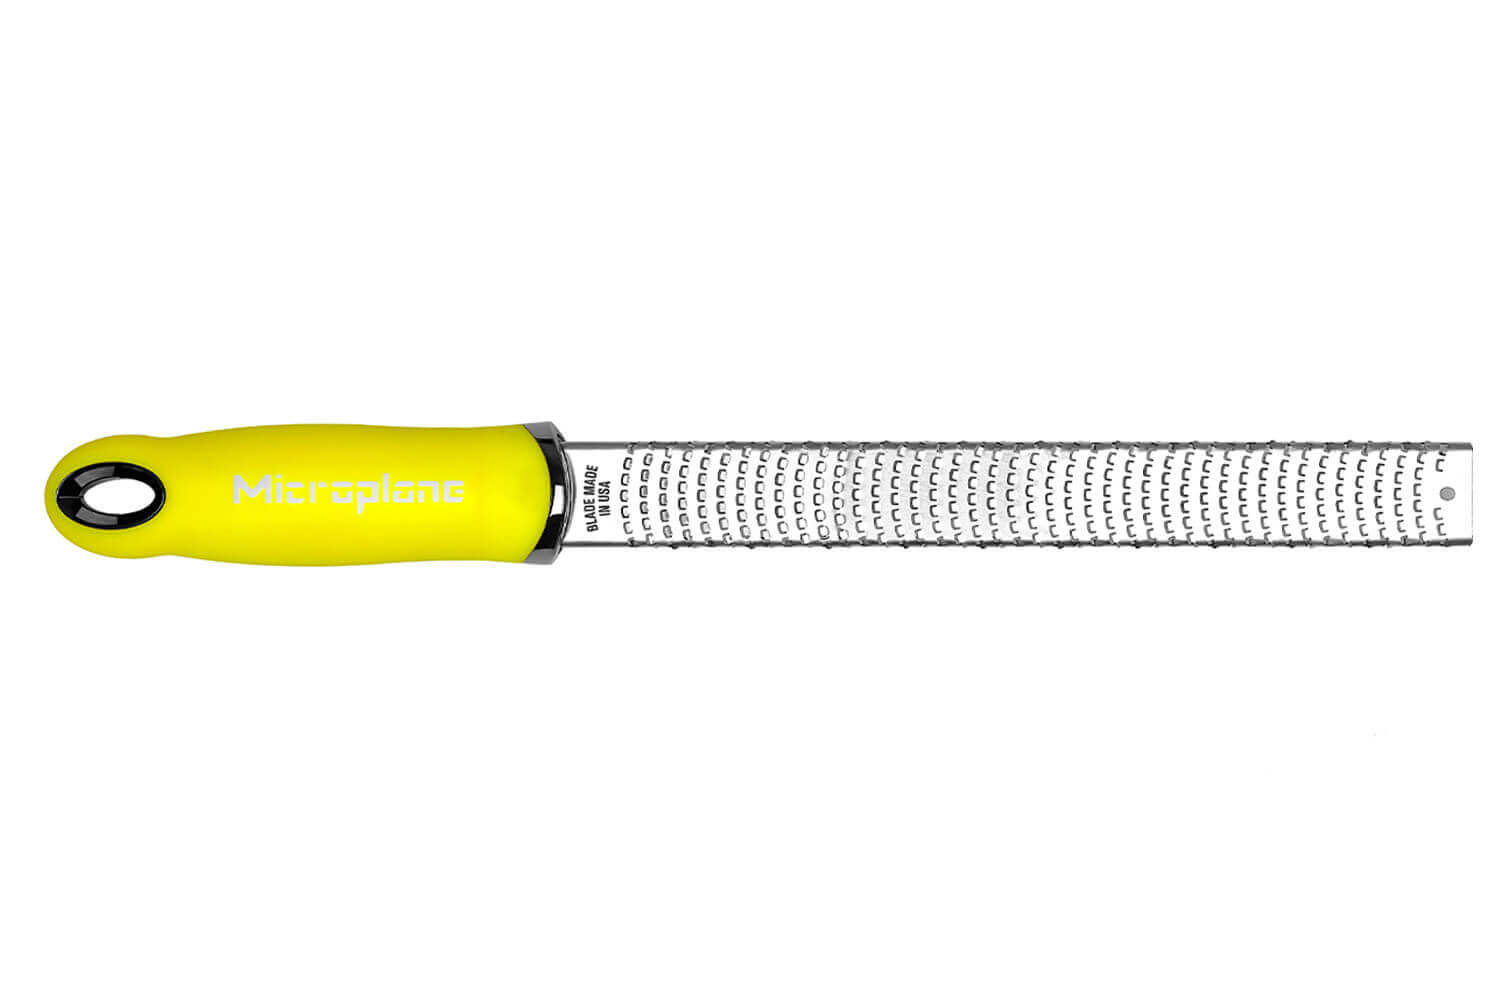 Zesteur-râpe Microplane Premium Classic Neon jaune